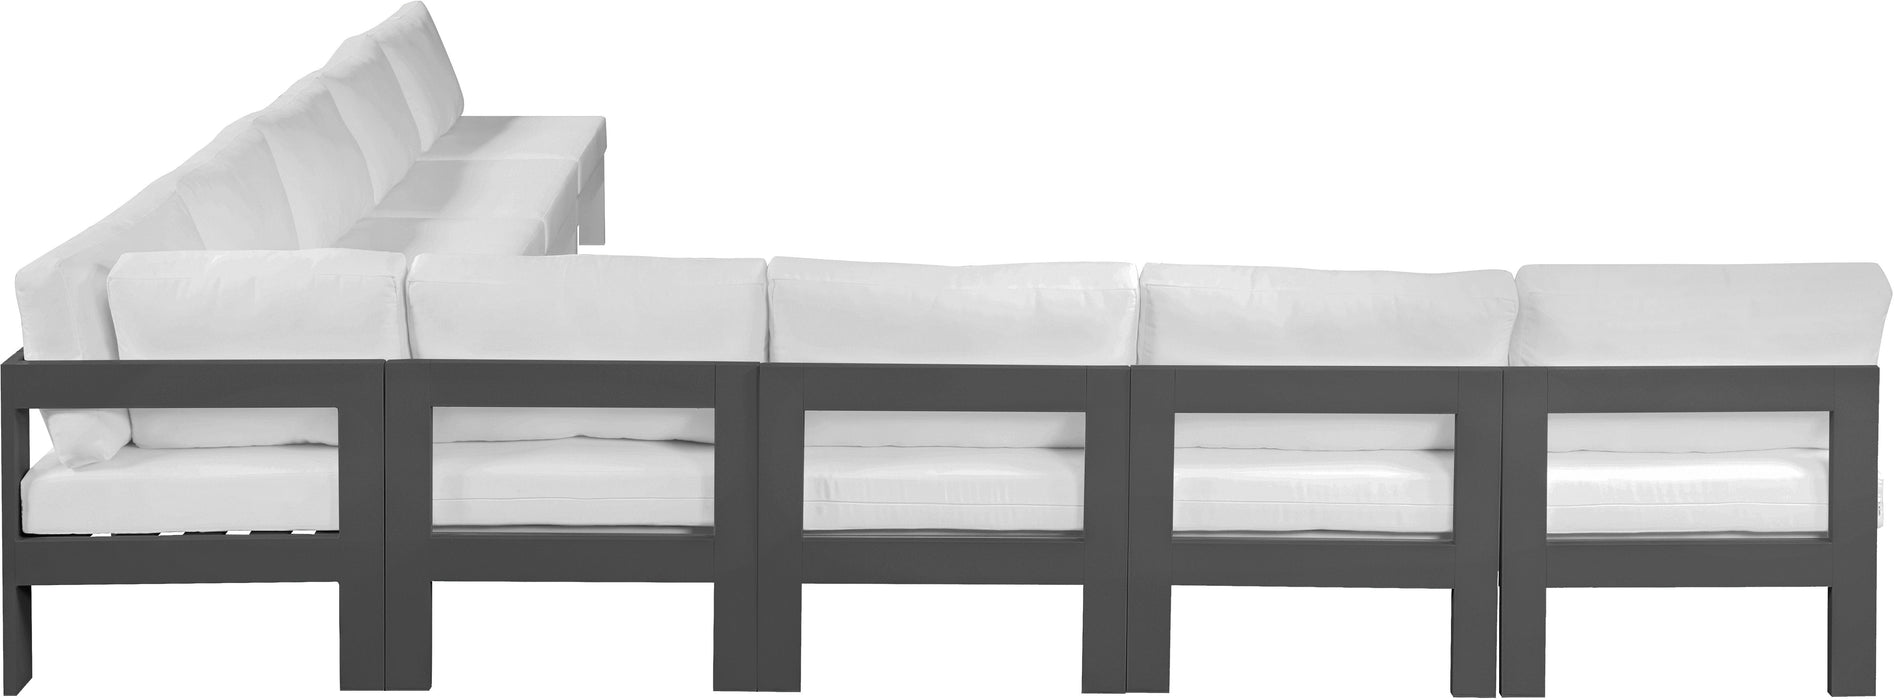 Nizuc - Outdoor Patio Modular Sectional 9 Piece - White - Fabric - Modern & Contemporary